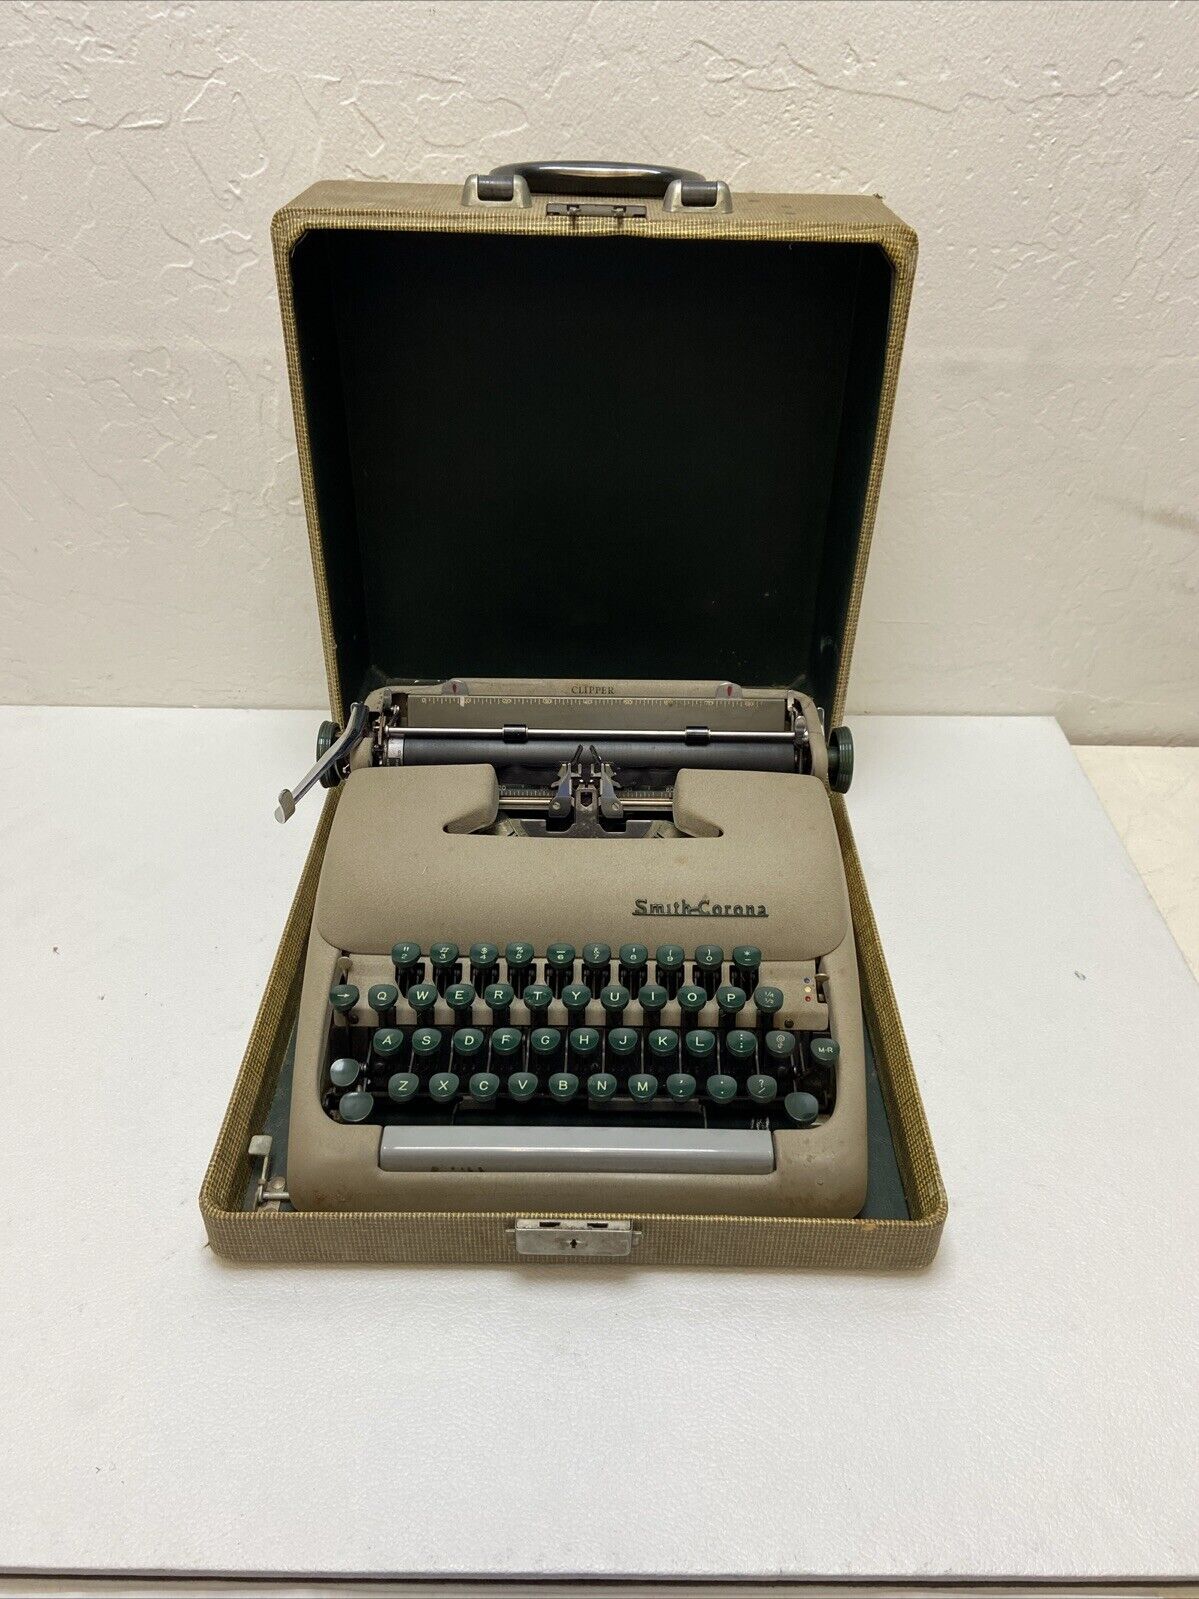 Smith-Corona Typewriter “Clipper”